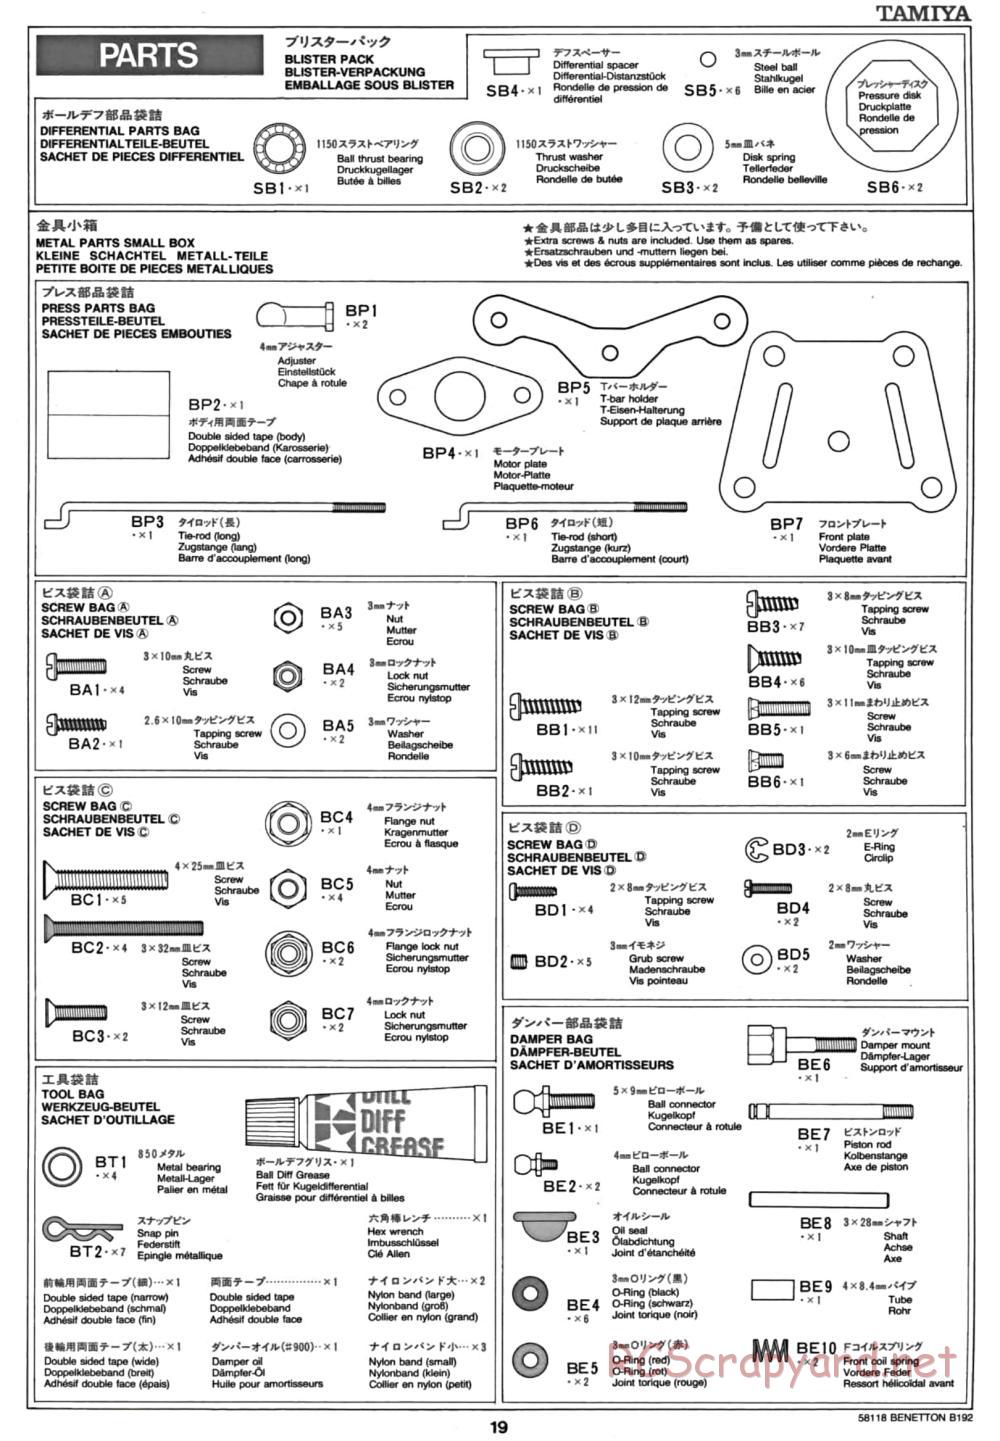 Tamiya - Benetton B192 - F102 Chassis - Manual - Page 19